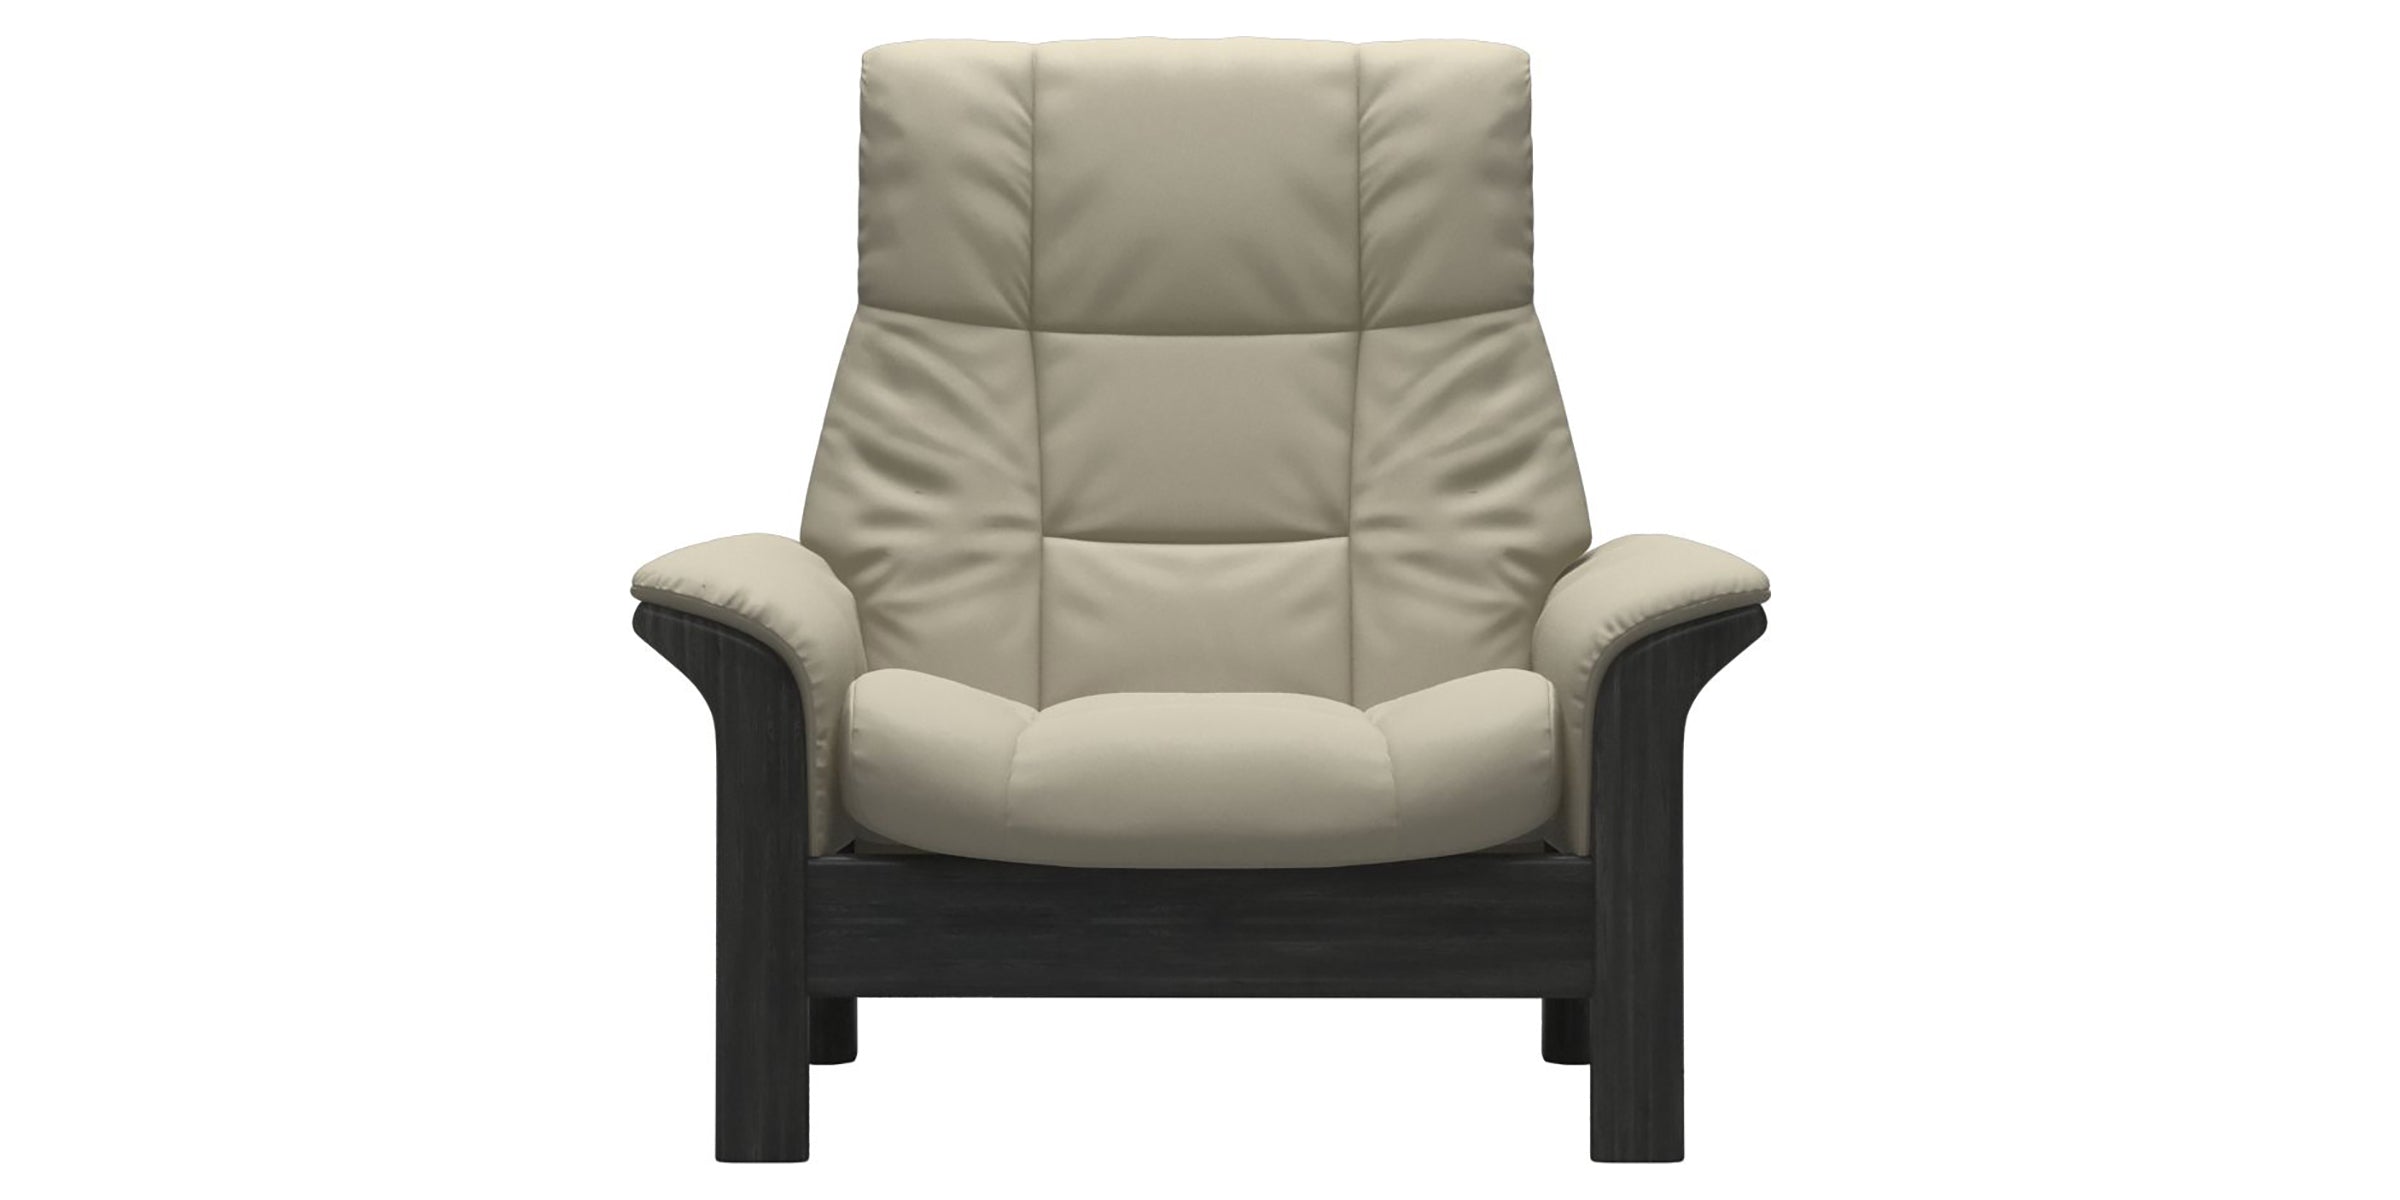 Paloma Leather Light Grey and Grey Base | Stressless Buckingham High Back Chair | Valley Ridge Furniture